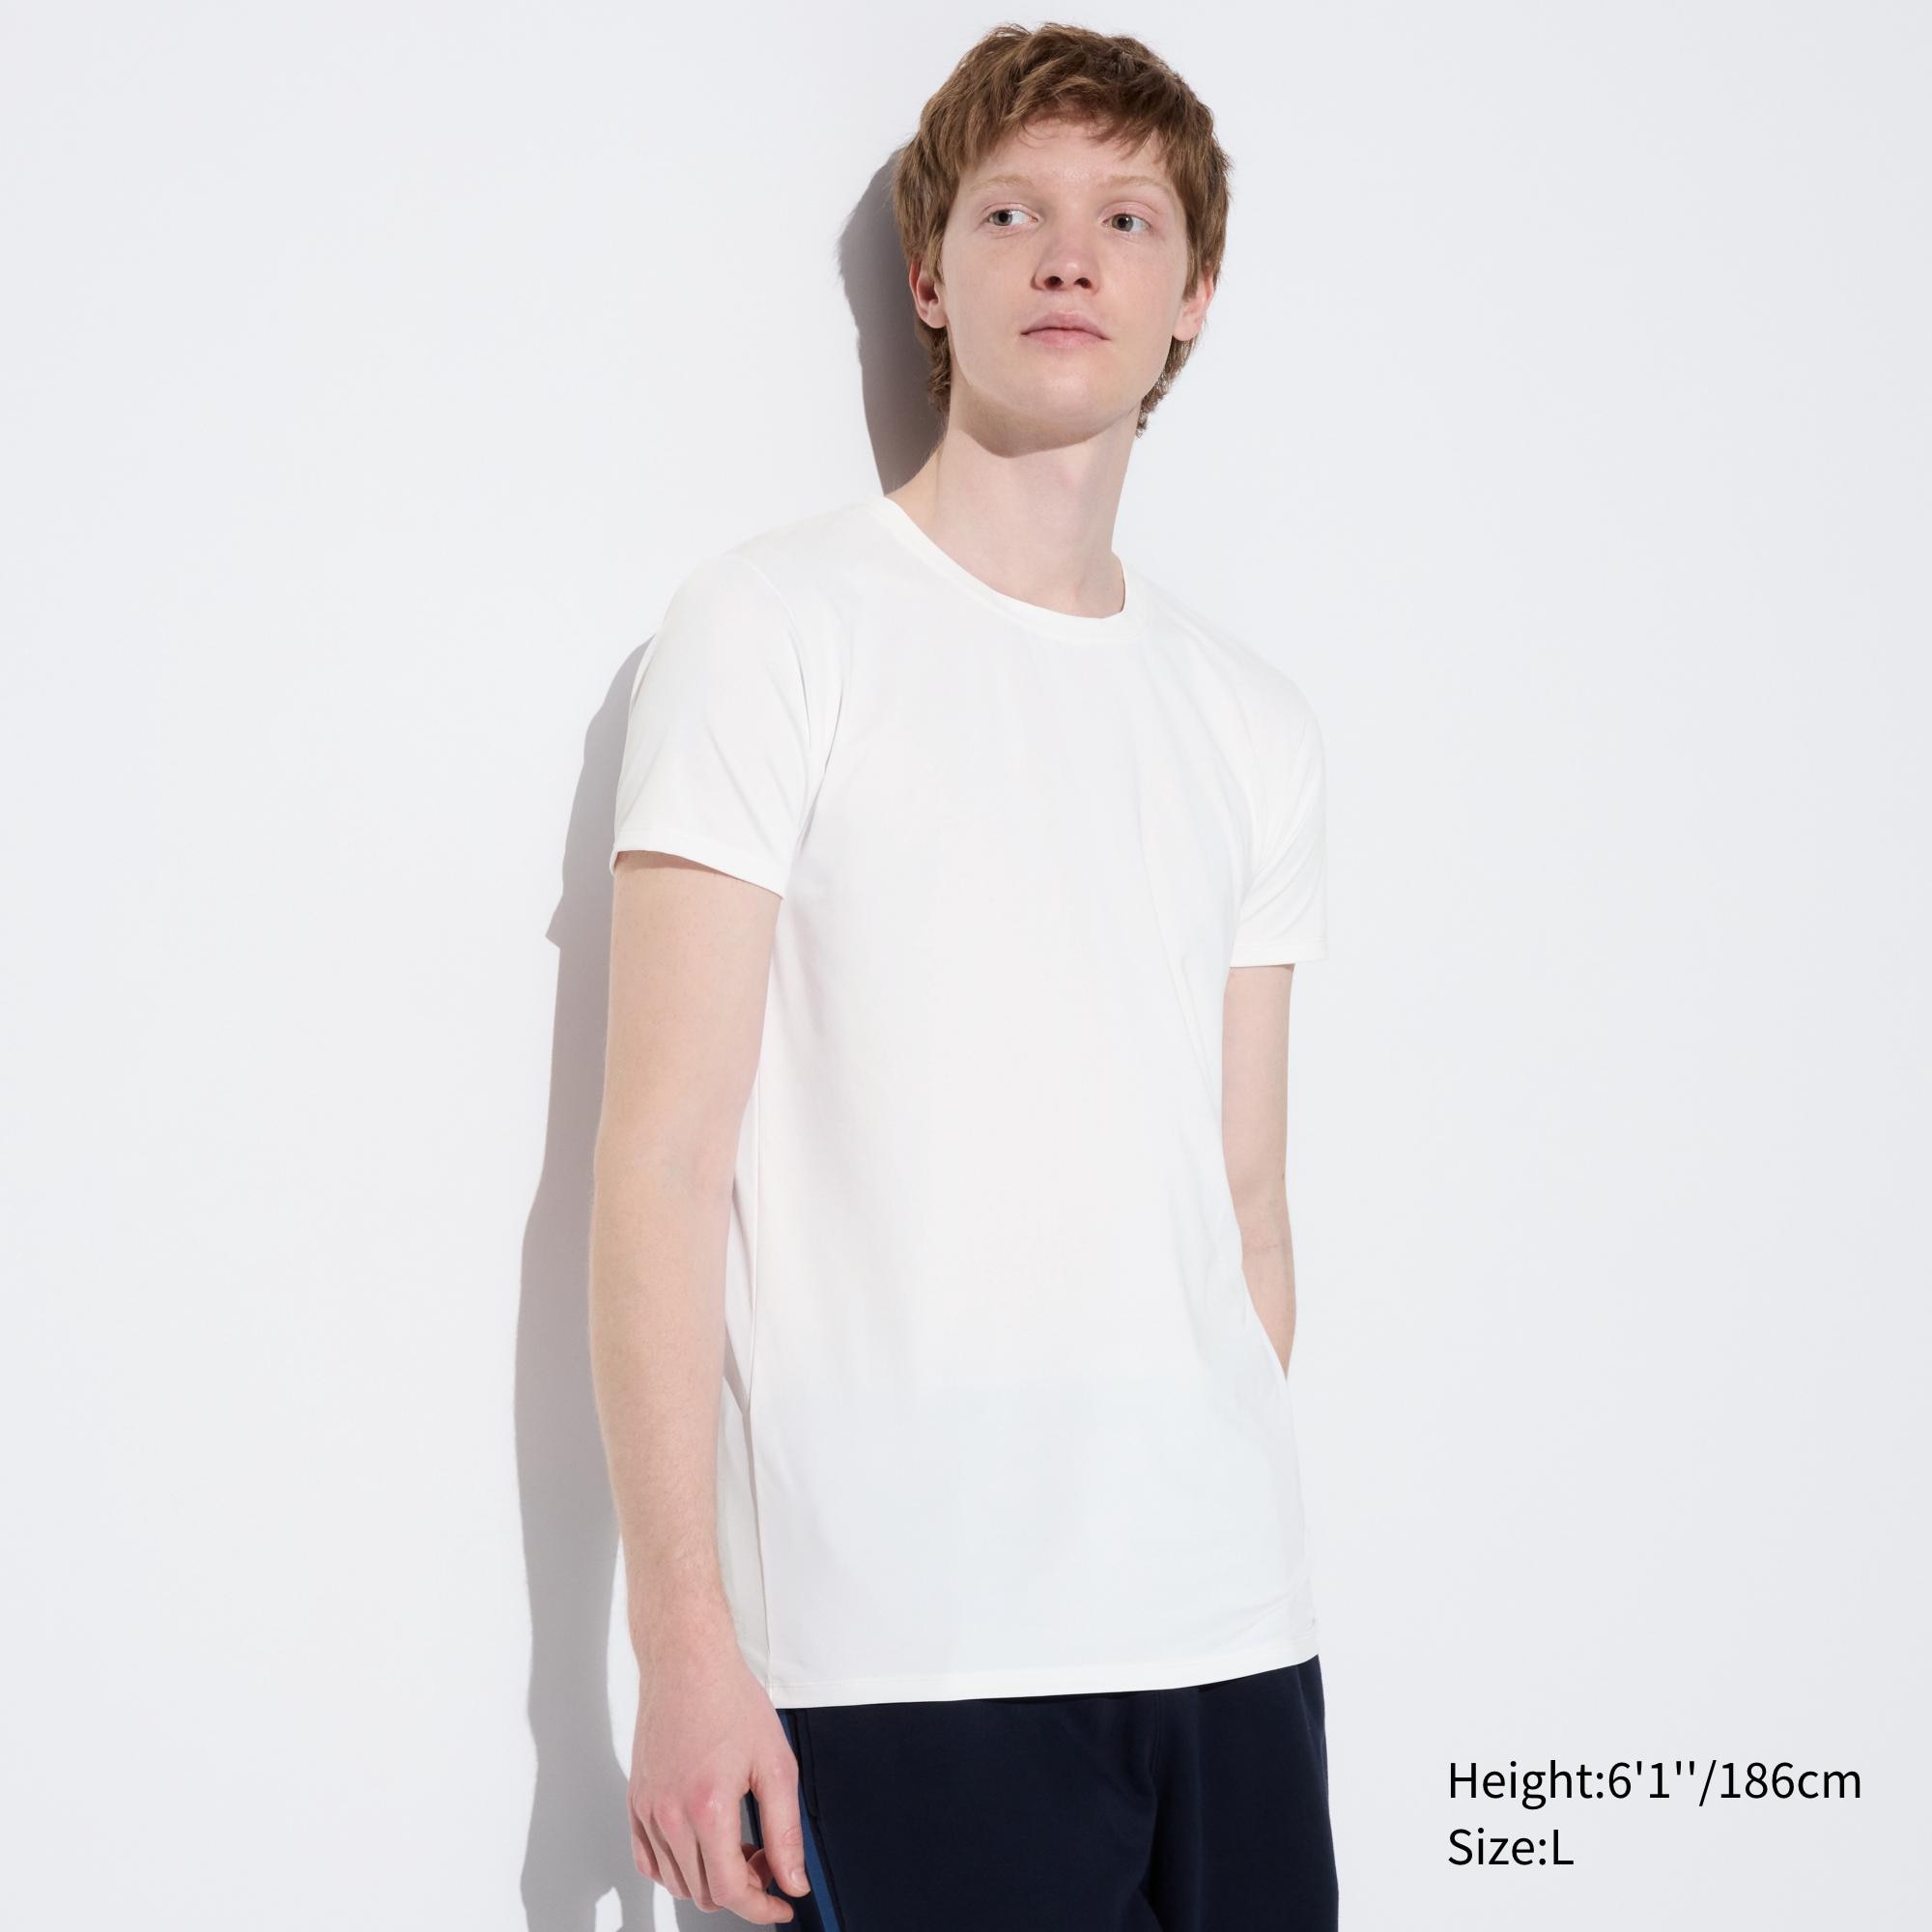 UNIQLO OVERSIZED WHITE SHIRT Mens Fashion Tops  Sets Tshirts  Polo  Shirts on Carousell